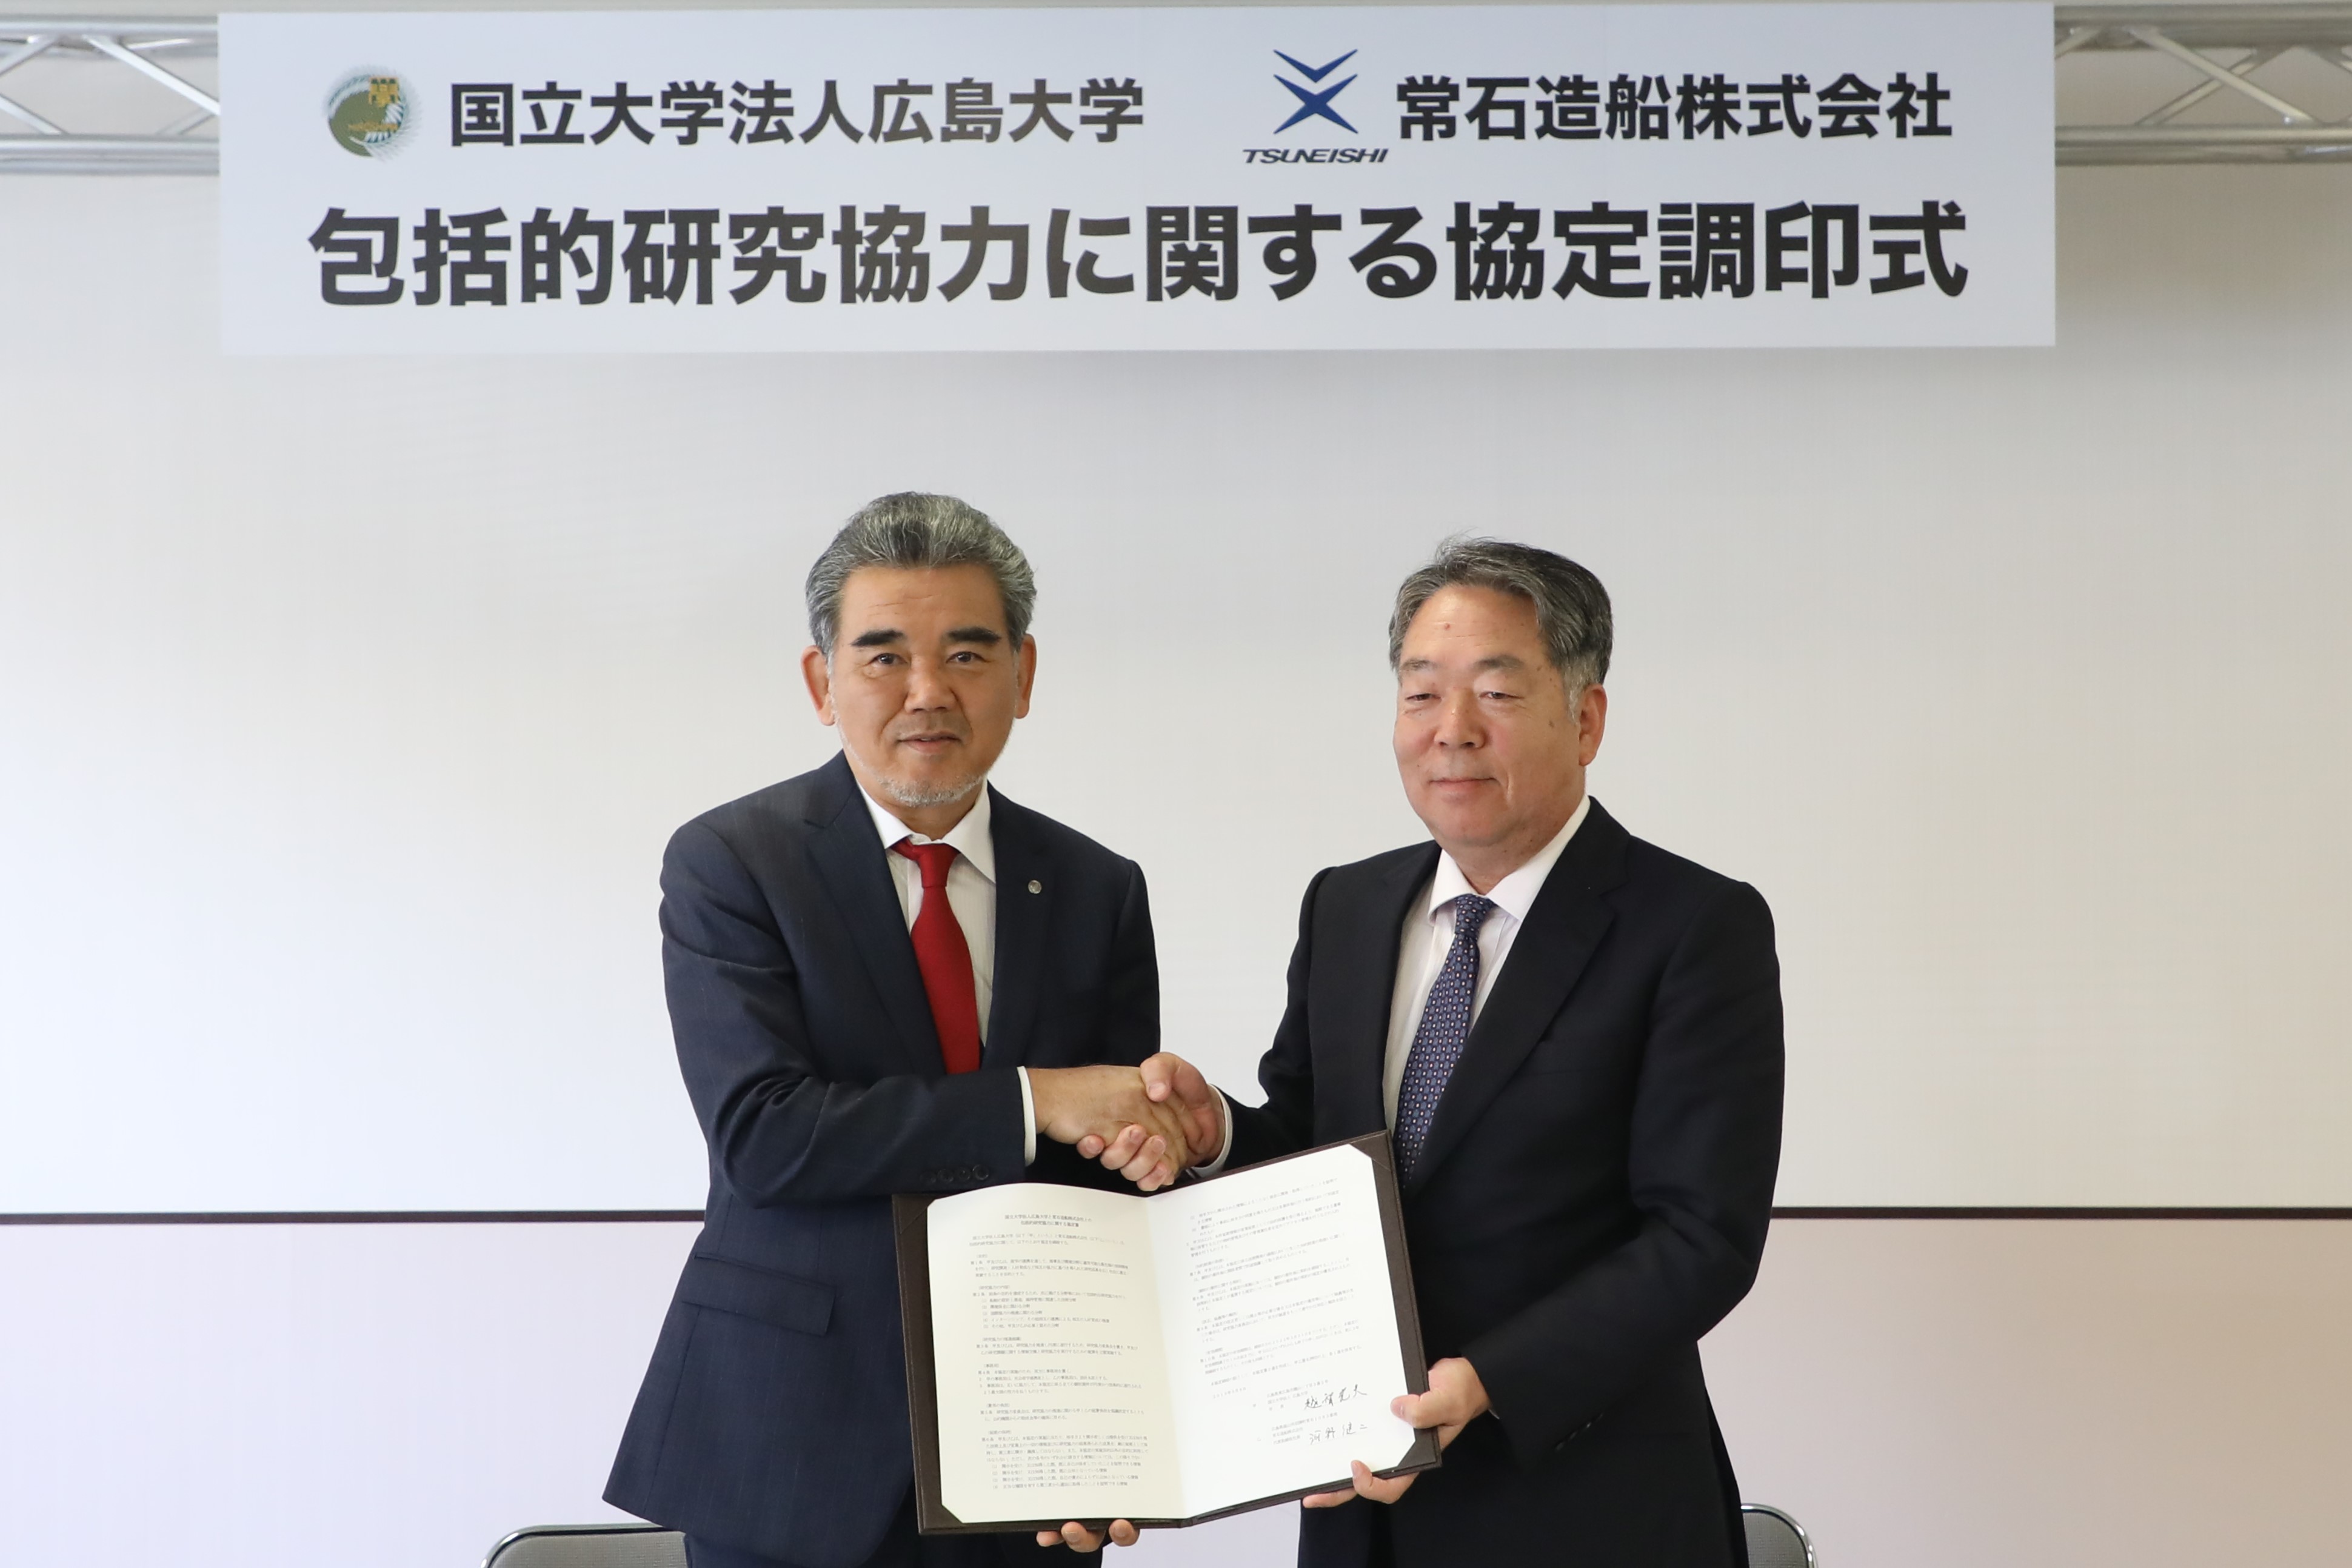 TSUNEISHI SHIPBUILDING and Hiroshima University Reach Agreement on Comprehensive Research Partnership